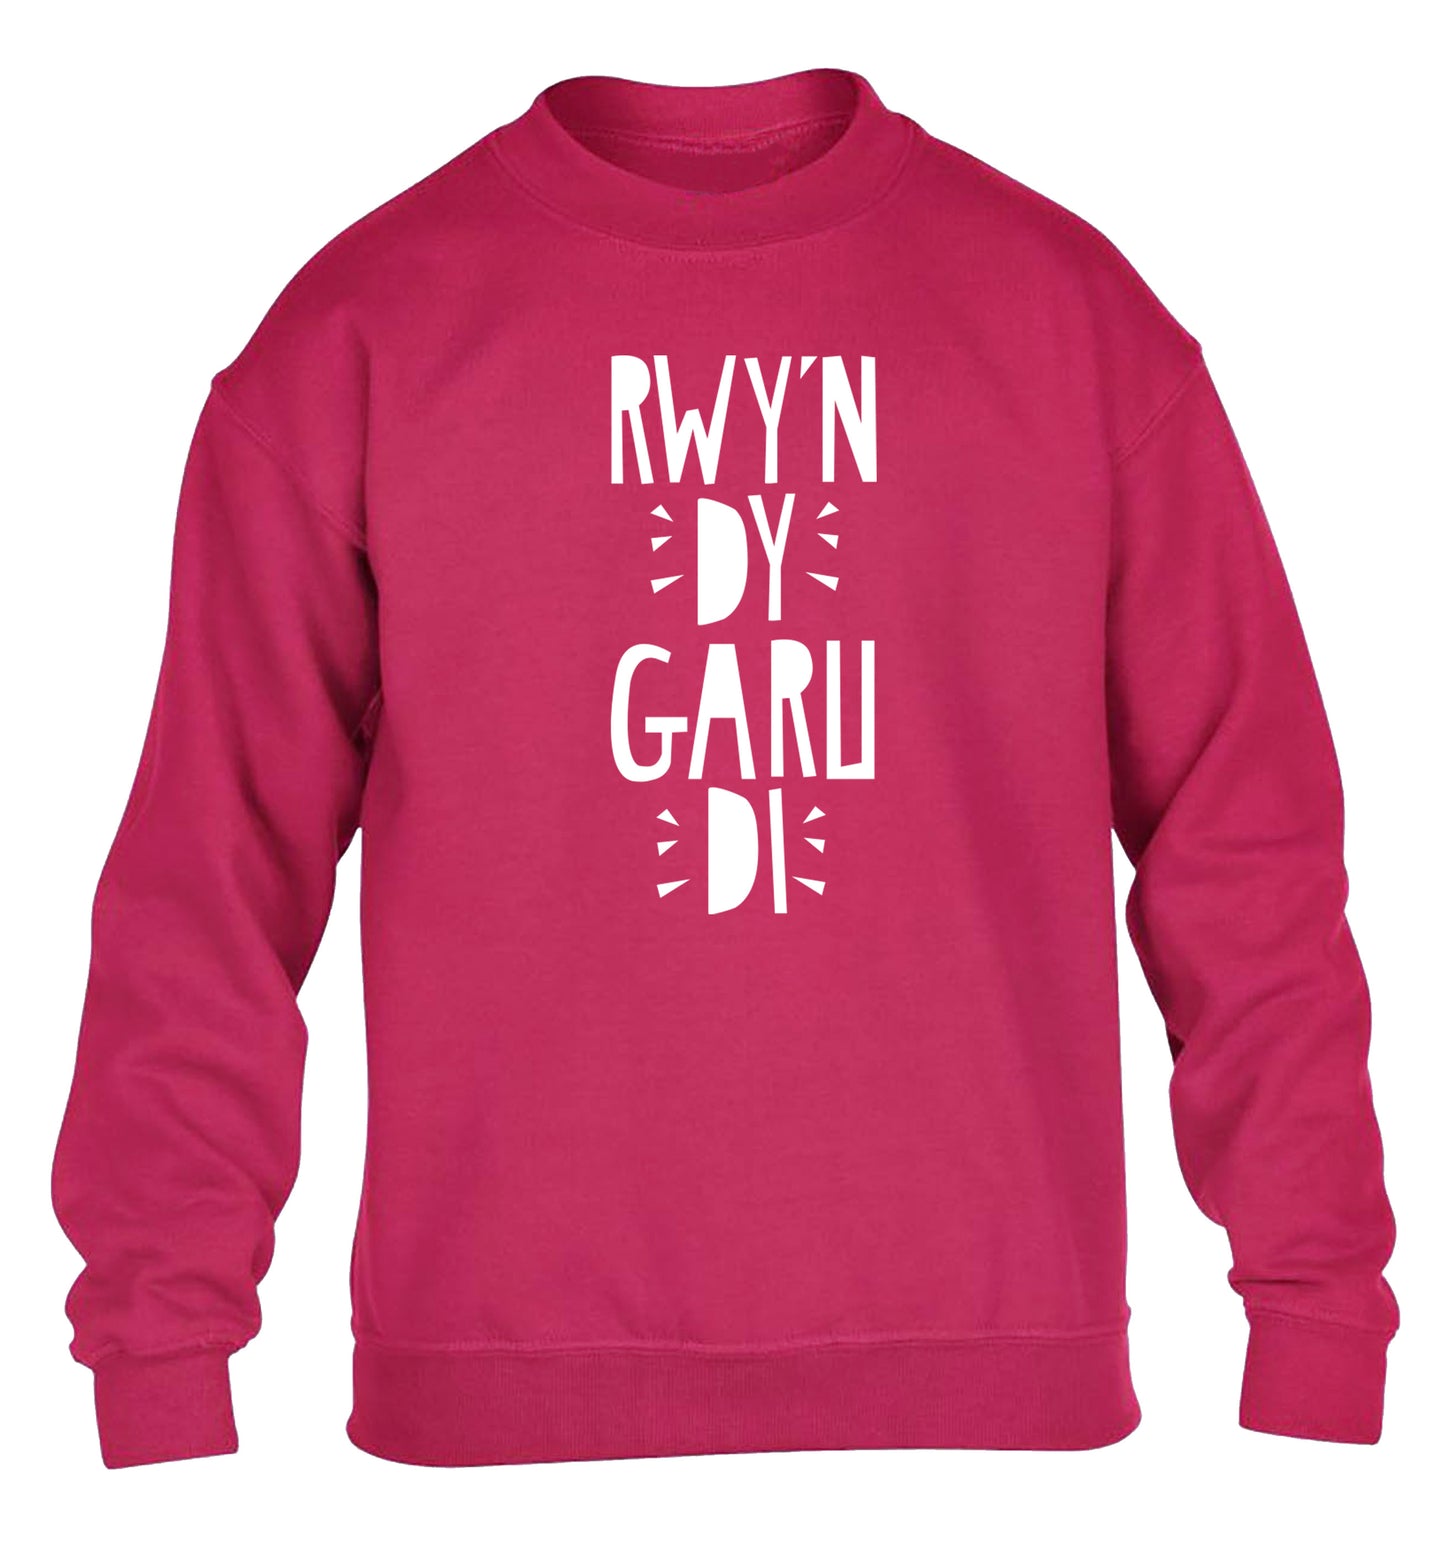 Rwy'n dy garu di - I love you children's pink sweater 12-13 Years